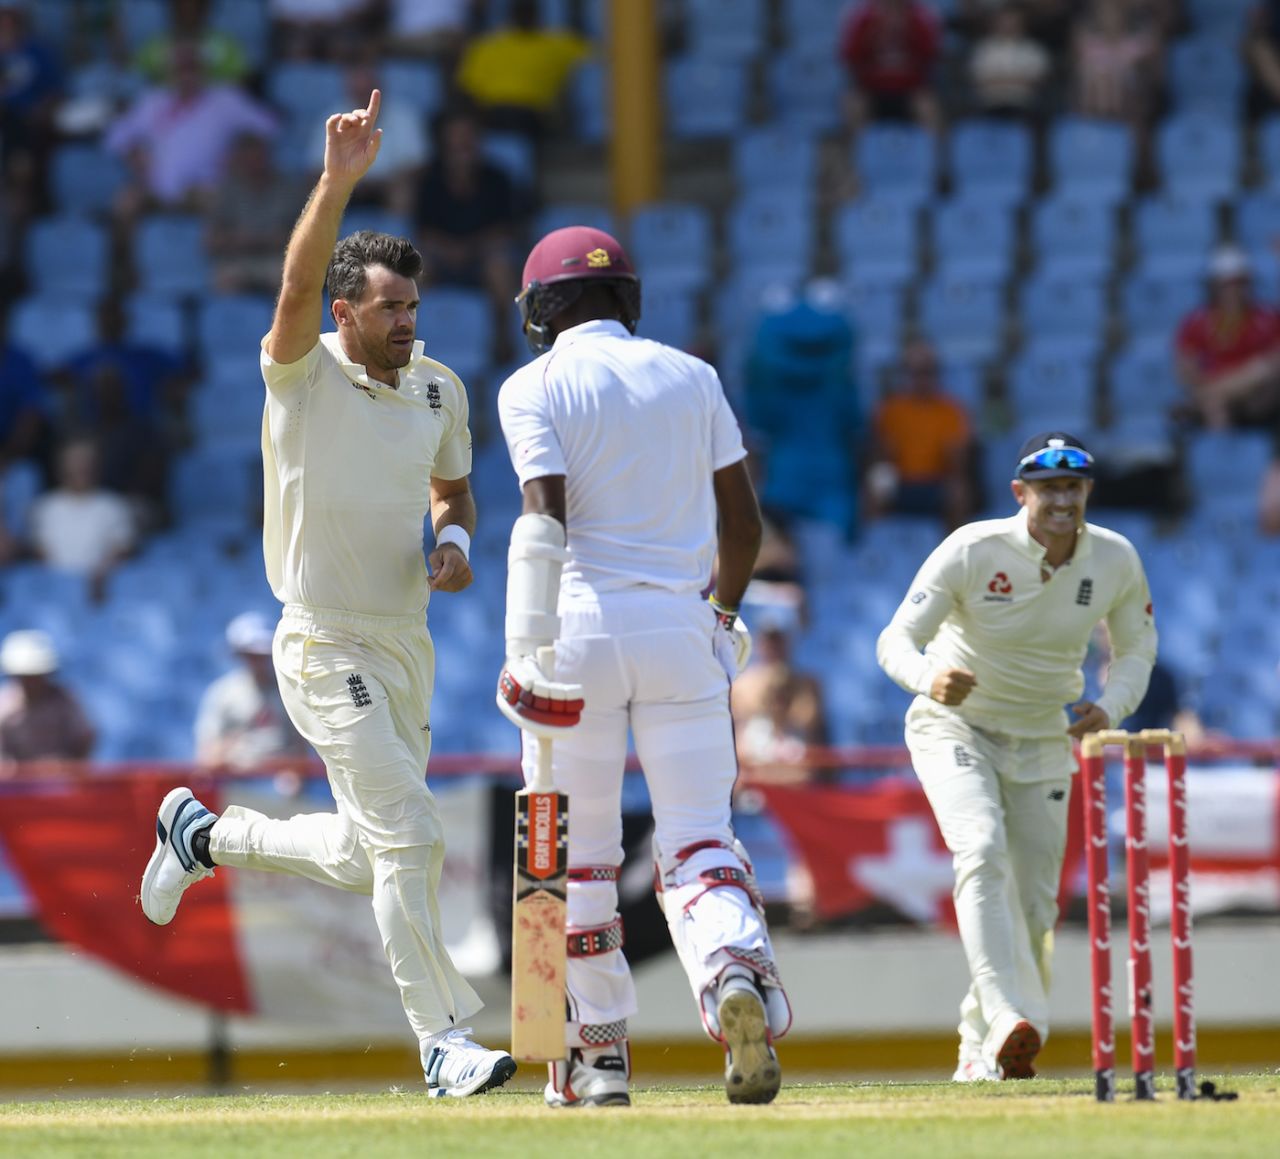 James Anderson dismisses Kraigg Brathwaite, West Indies v England, 3rd Test, St Lucia, 2nd day, February 10, 2019